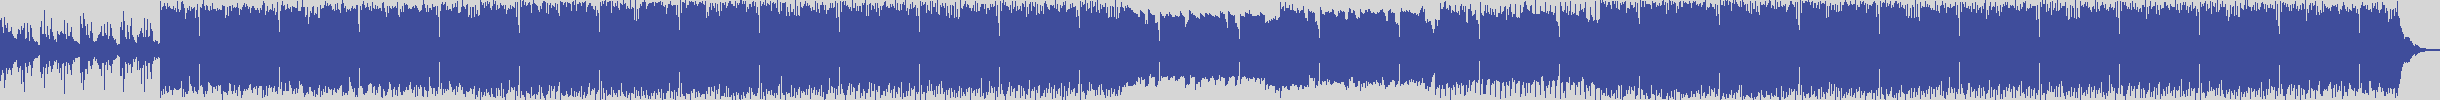 nf_boyz_records [NFY028] Edward Alone - Give Up [Satoshy Hiko's Deep Mix] audio wave form